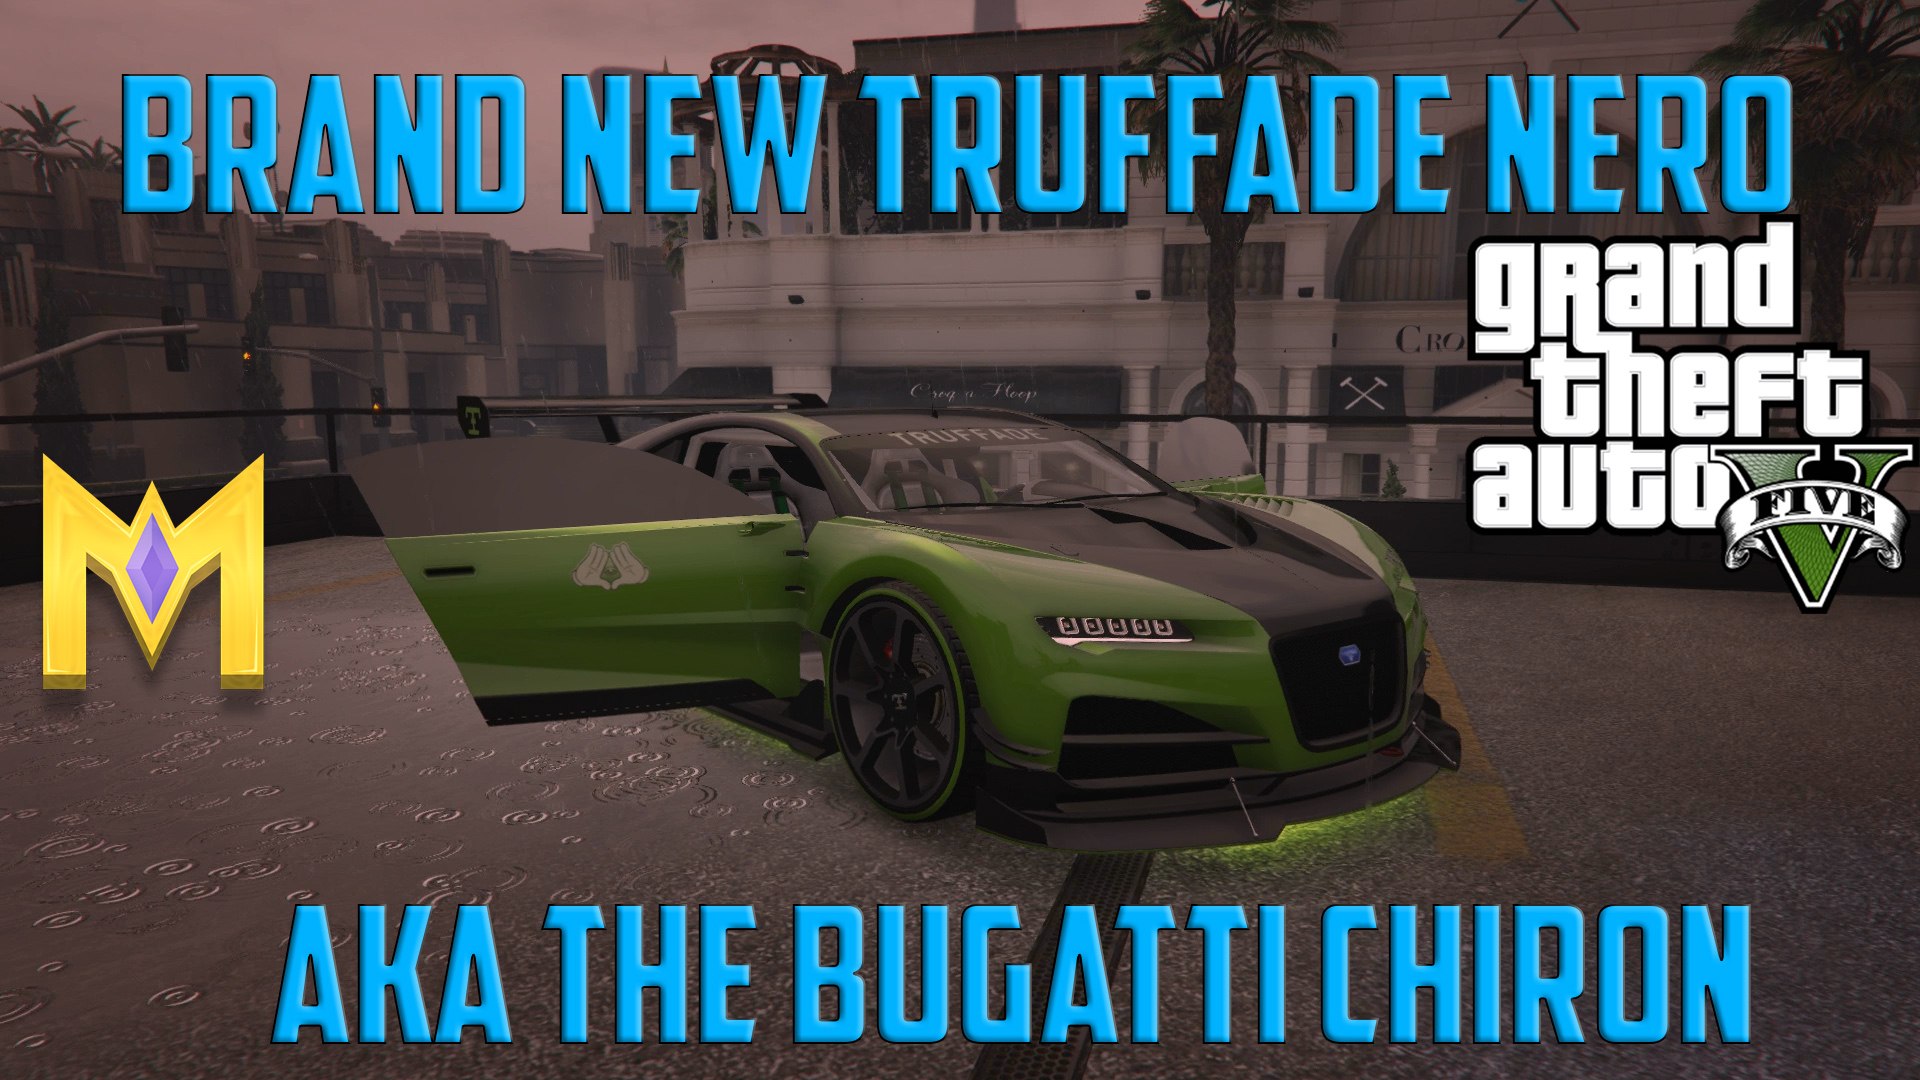 Gta 5 Online Dlc New Truffade Nero Aka The Bugatti Chiron Gta 5 Import And Export Video Dailymotion